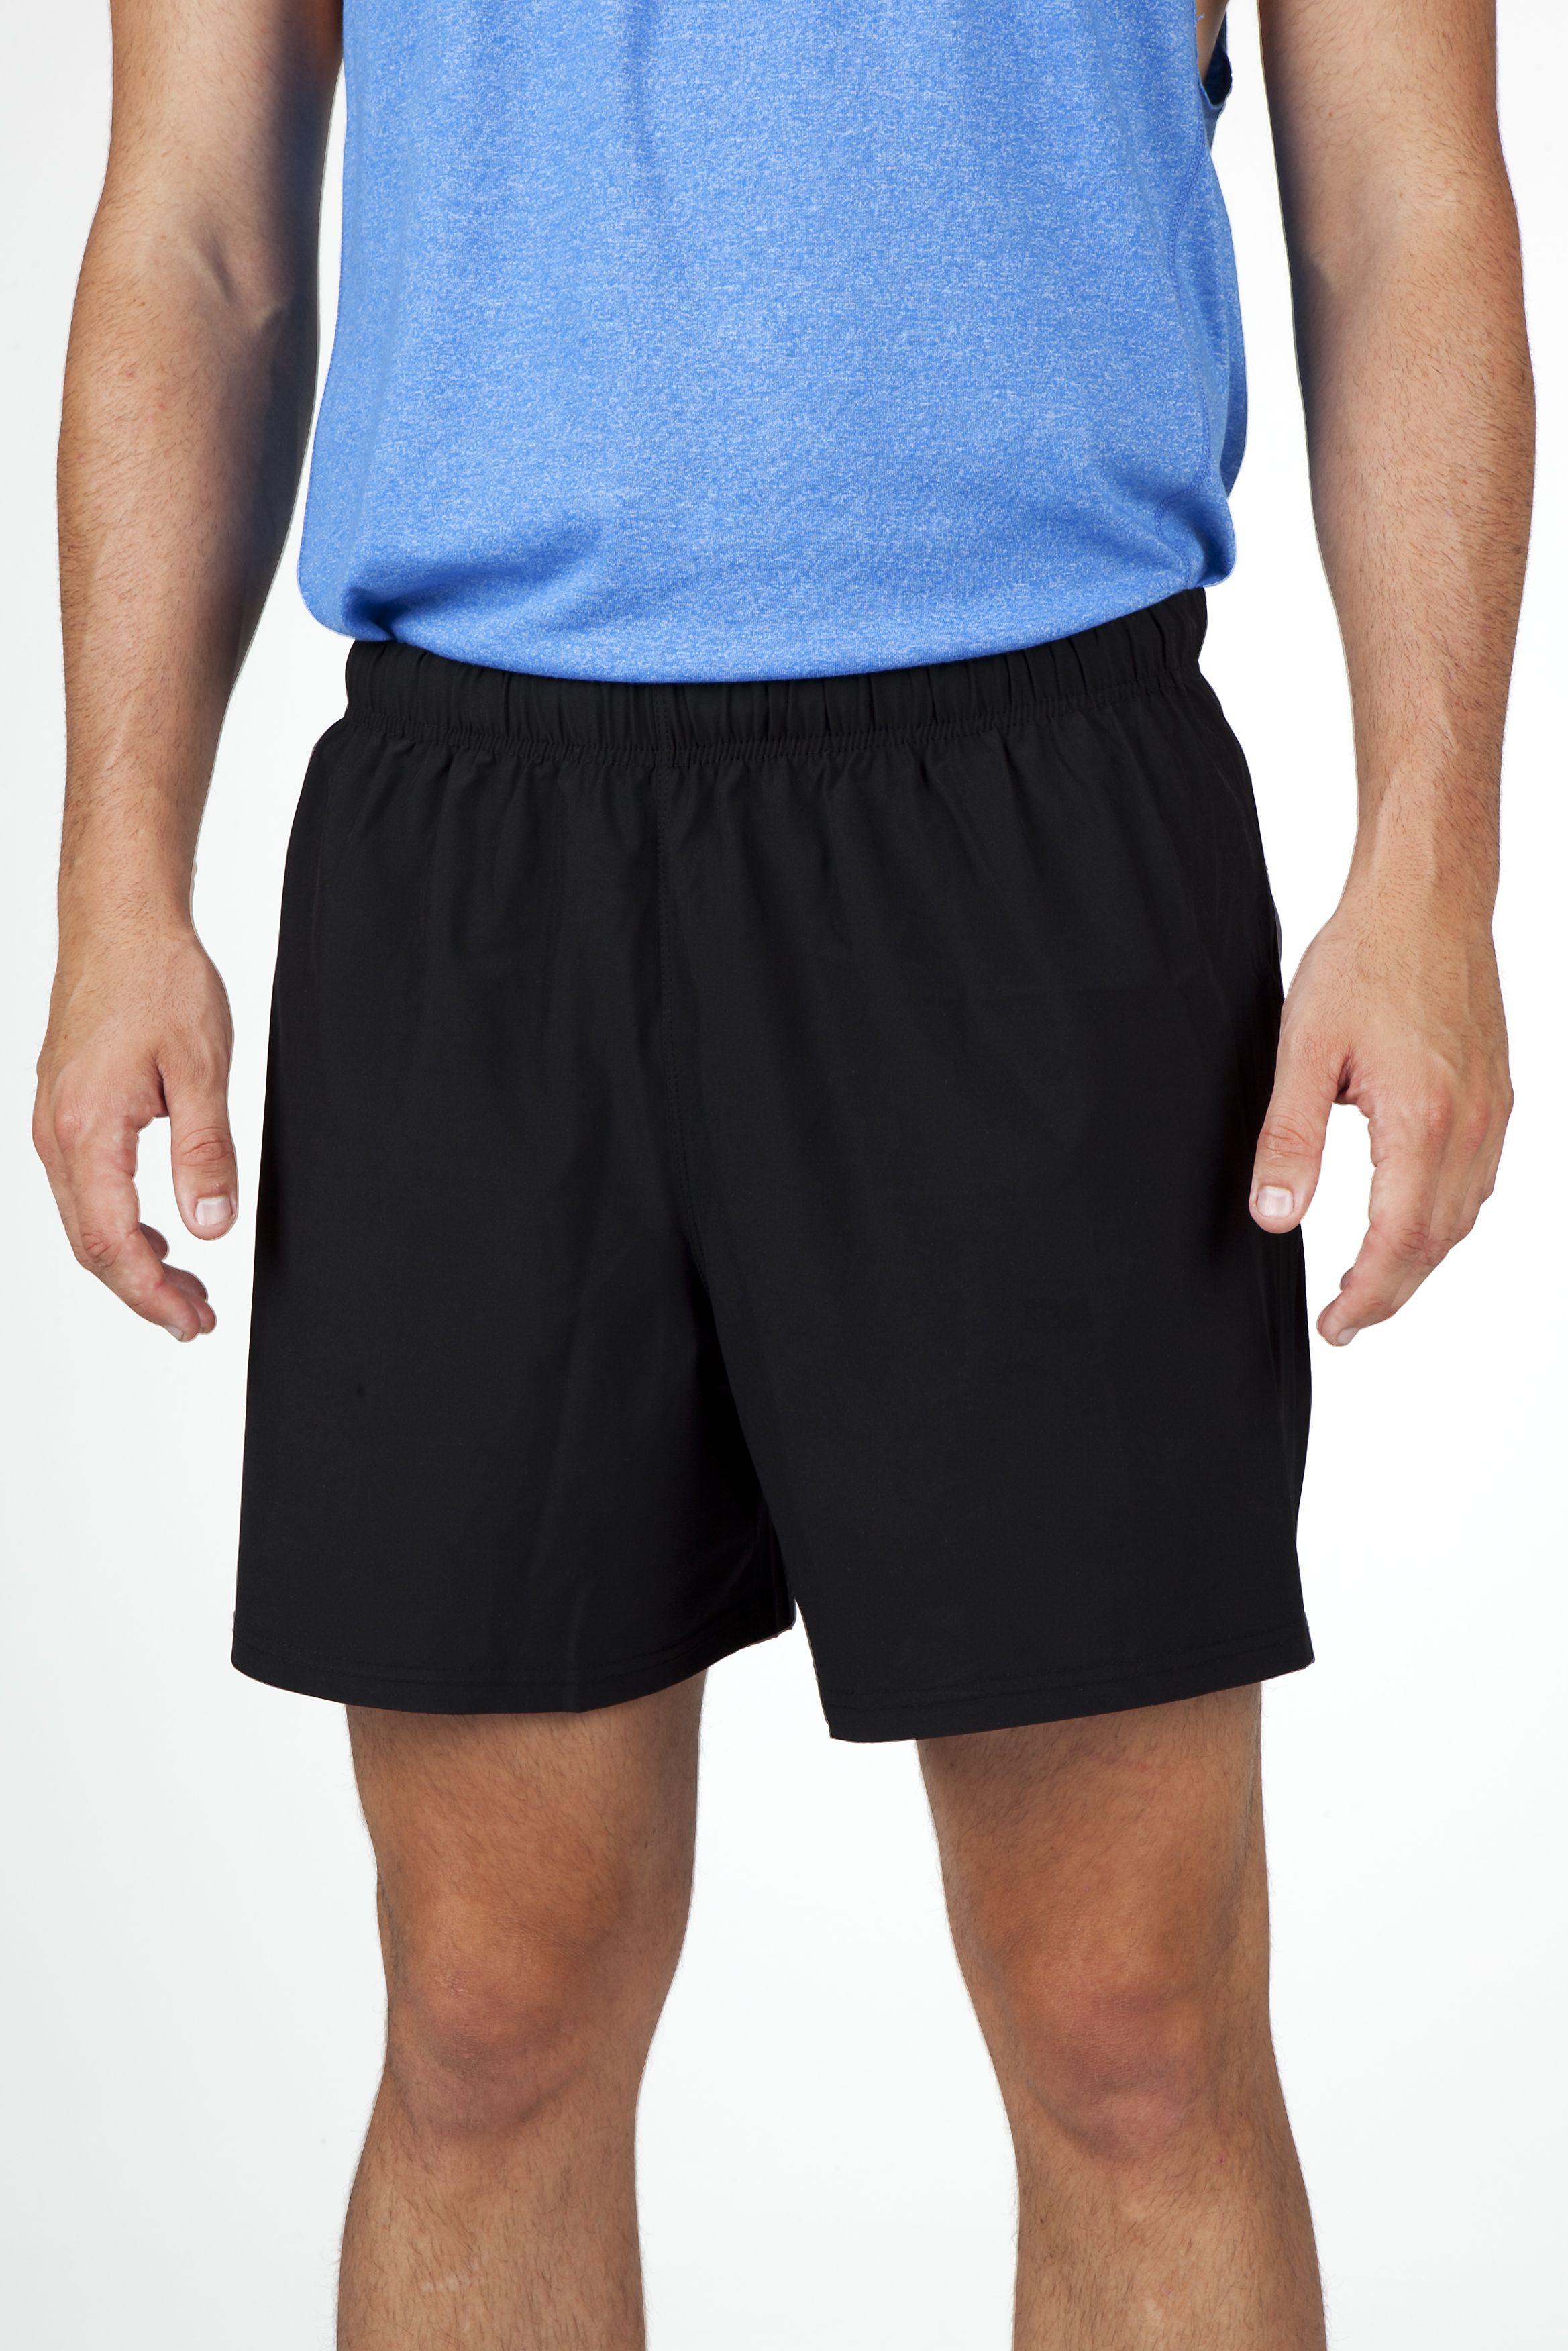 Mens' FLEX Shorts - 4 way stretch - S611HB - Ramo | SKG Uniforms